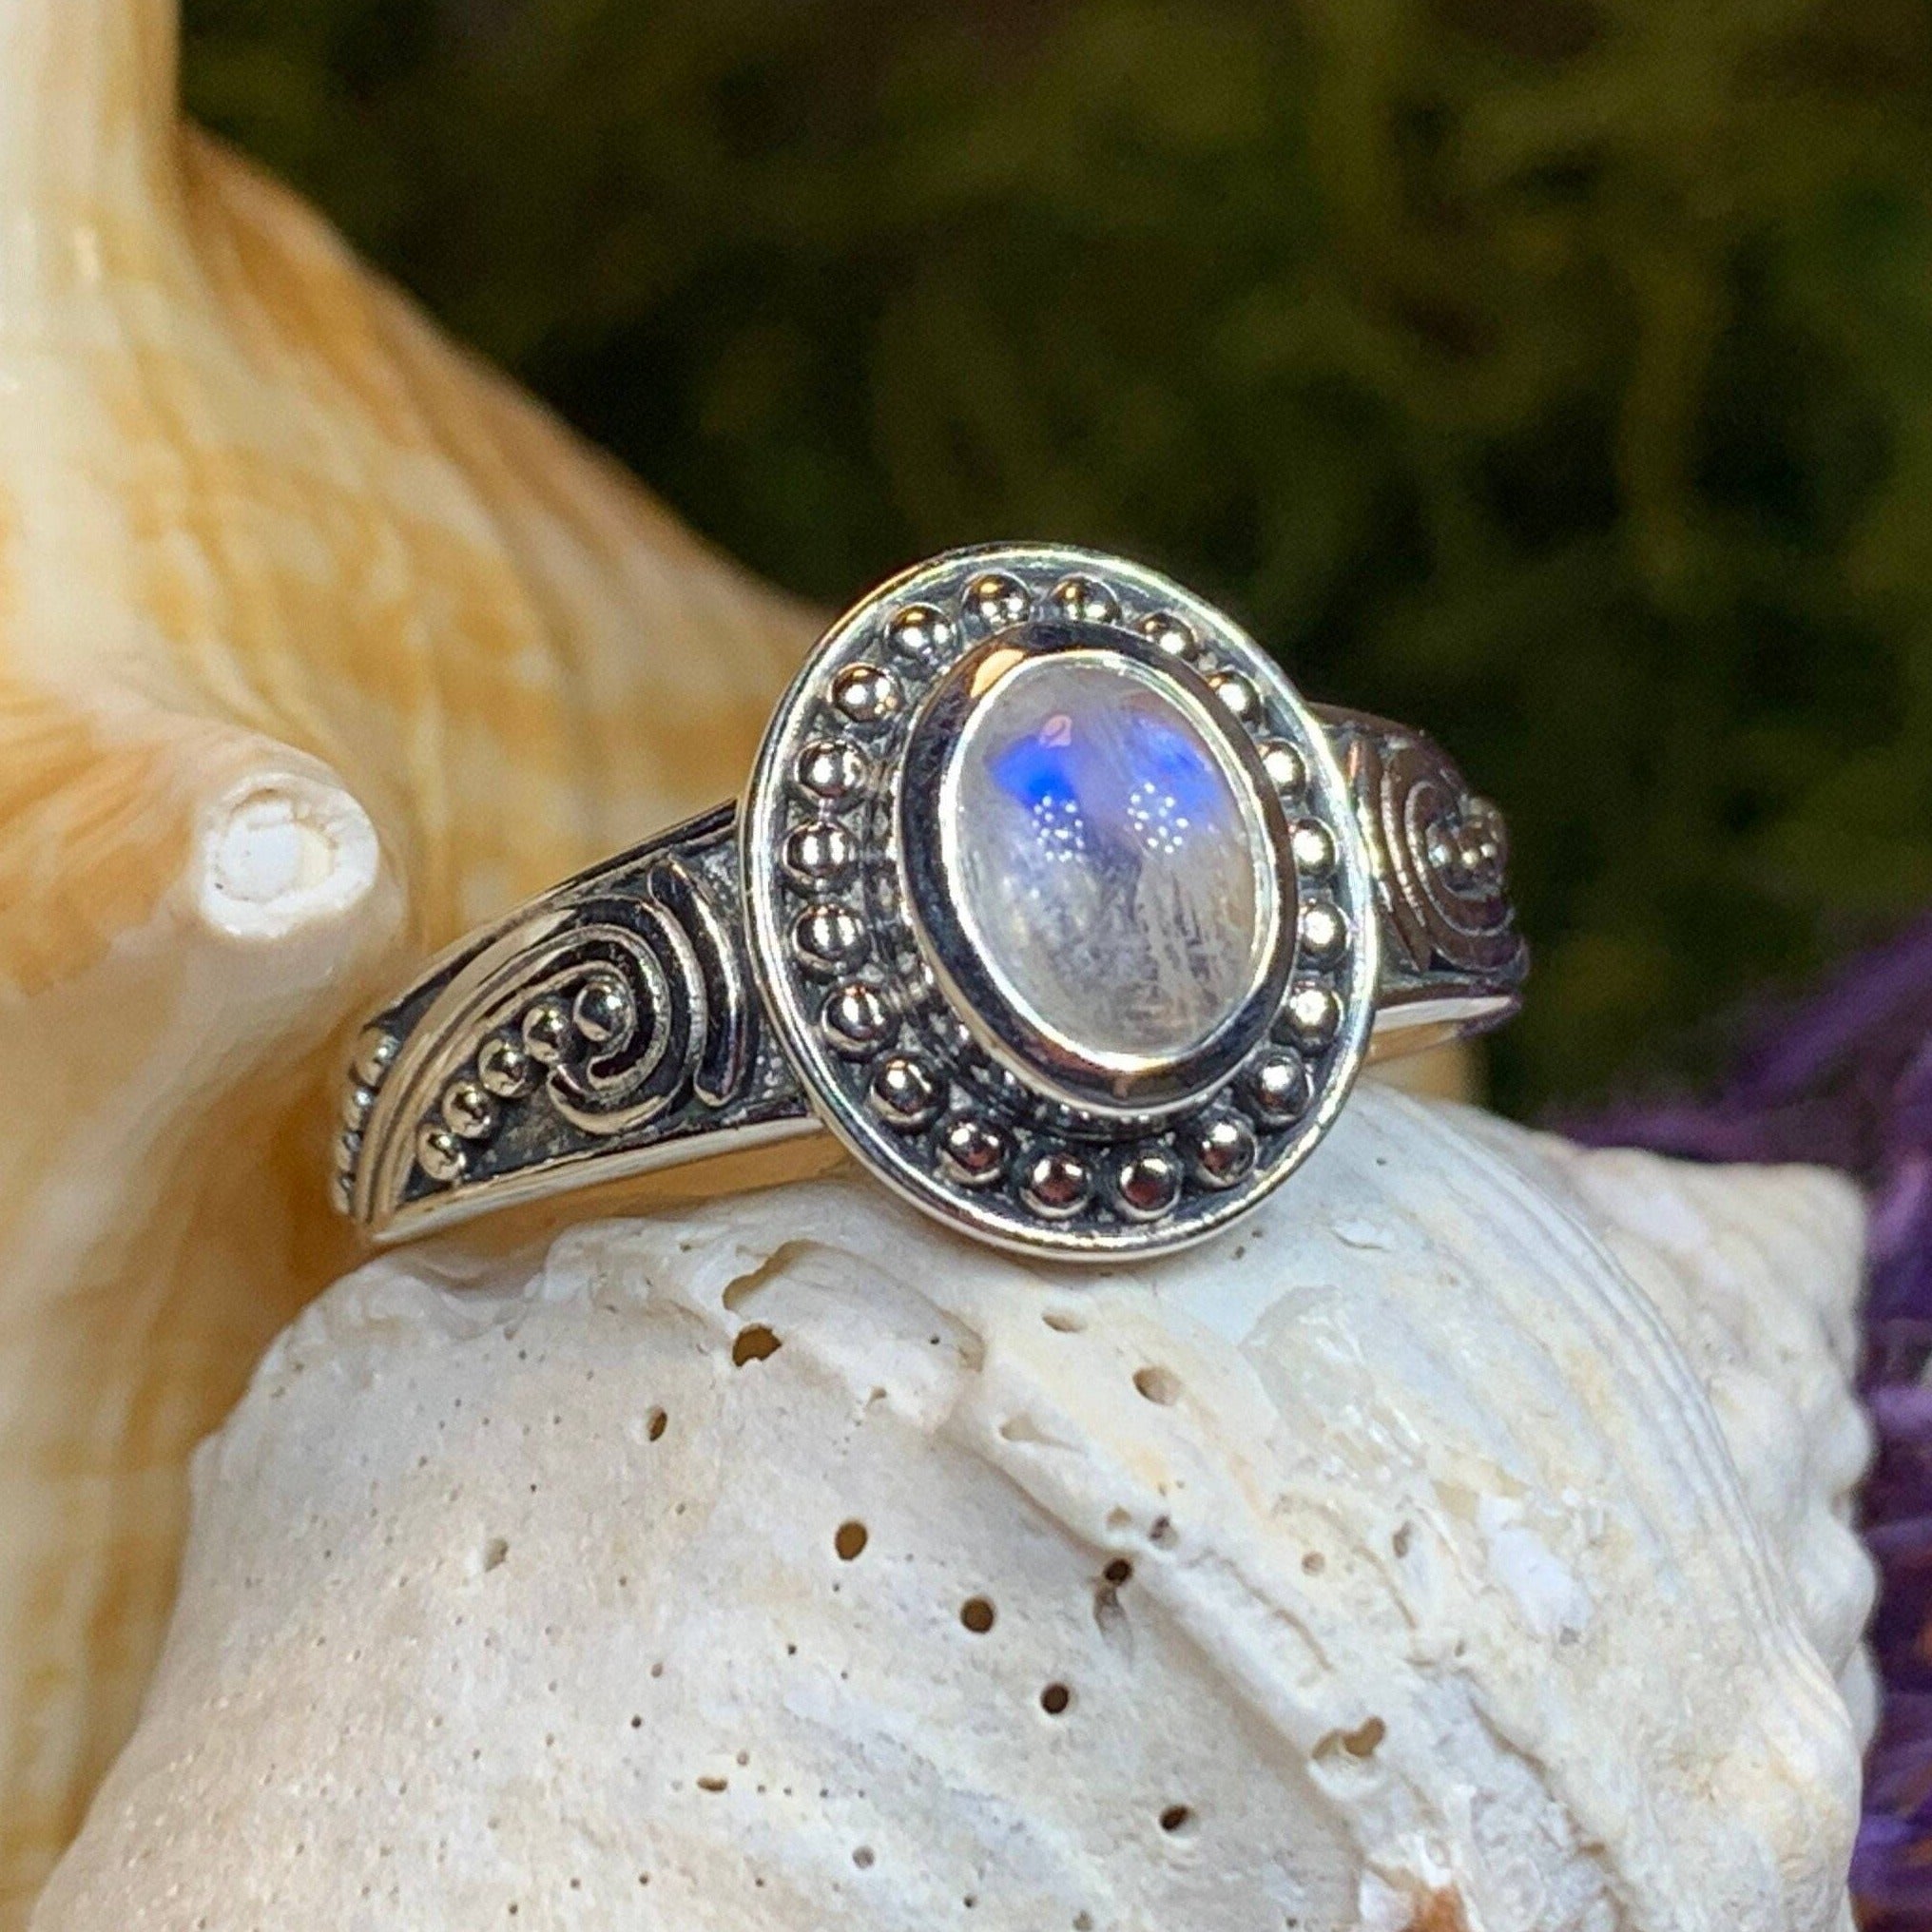 Buy Moonstone Ring, Stone Ring, Brass Ring, Moonstone Jewelry, Boho Ring, Bohemian  Jewelry, Dainty Ring, Women Ring, Jewelry for Her, Moonstone at Amazon.in